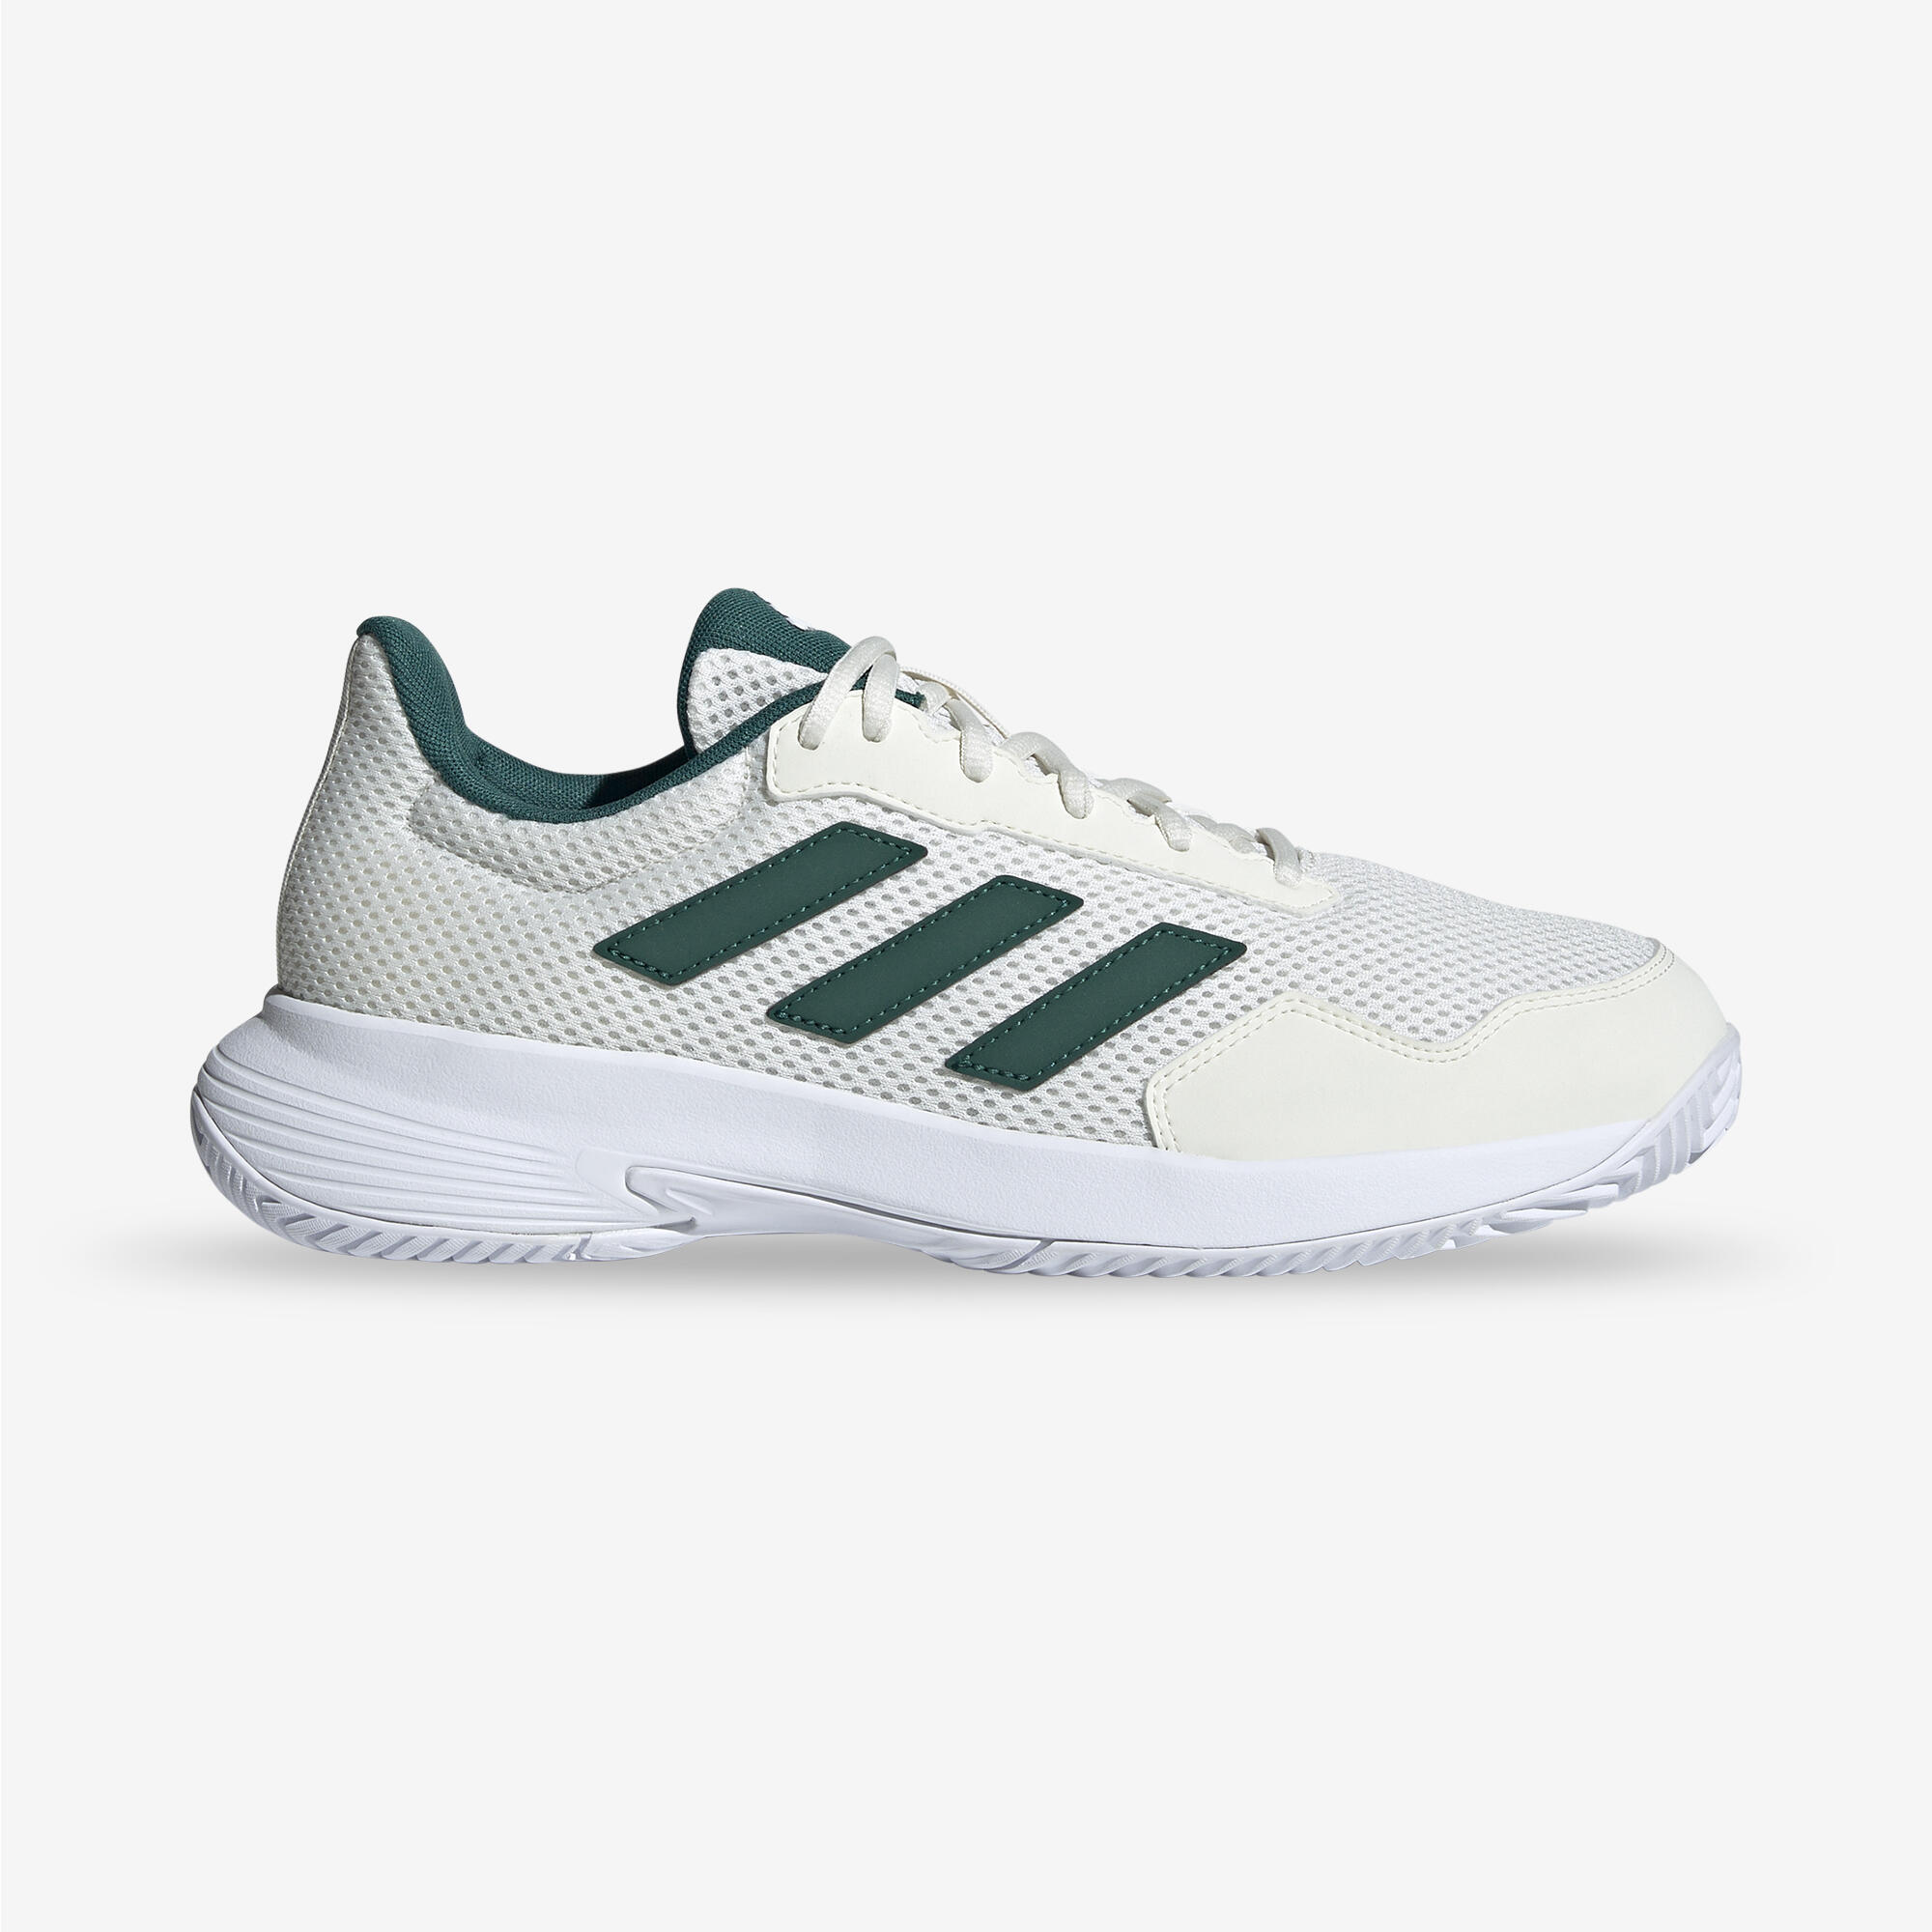 Adidas Men's Multicourt Tennis Shoes Gamespec - White/green